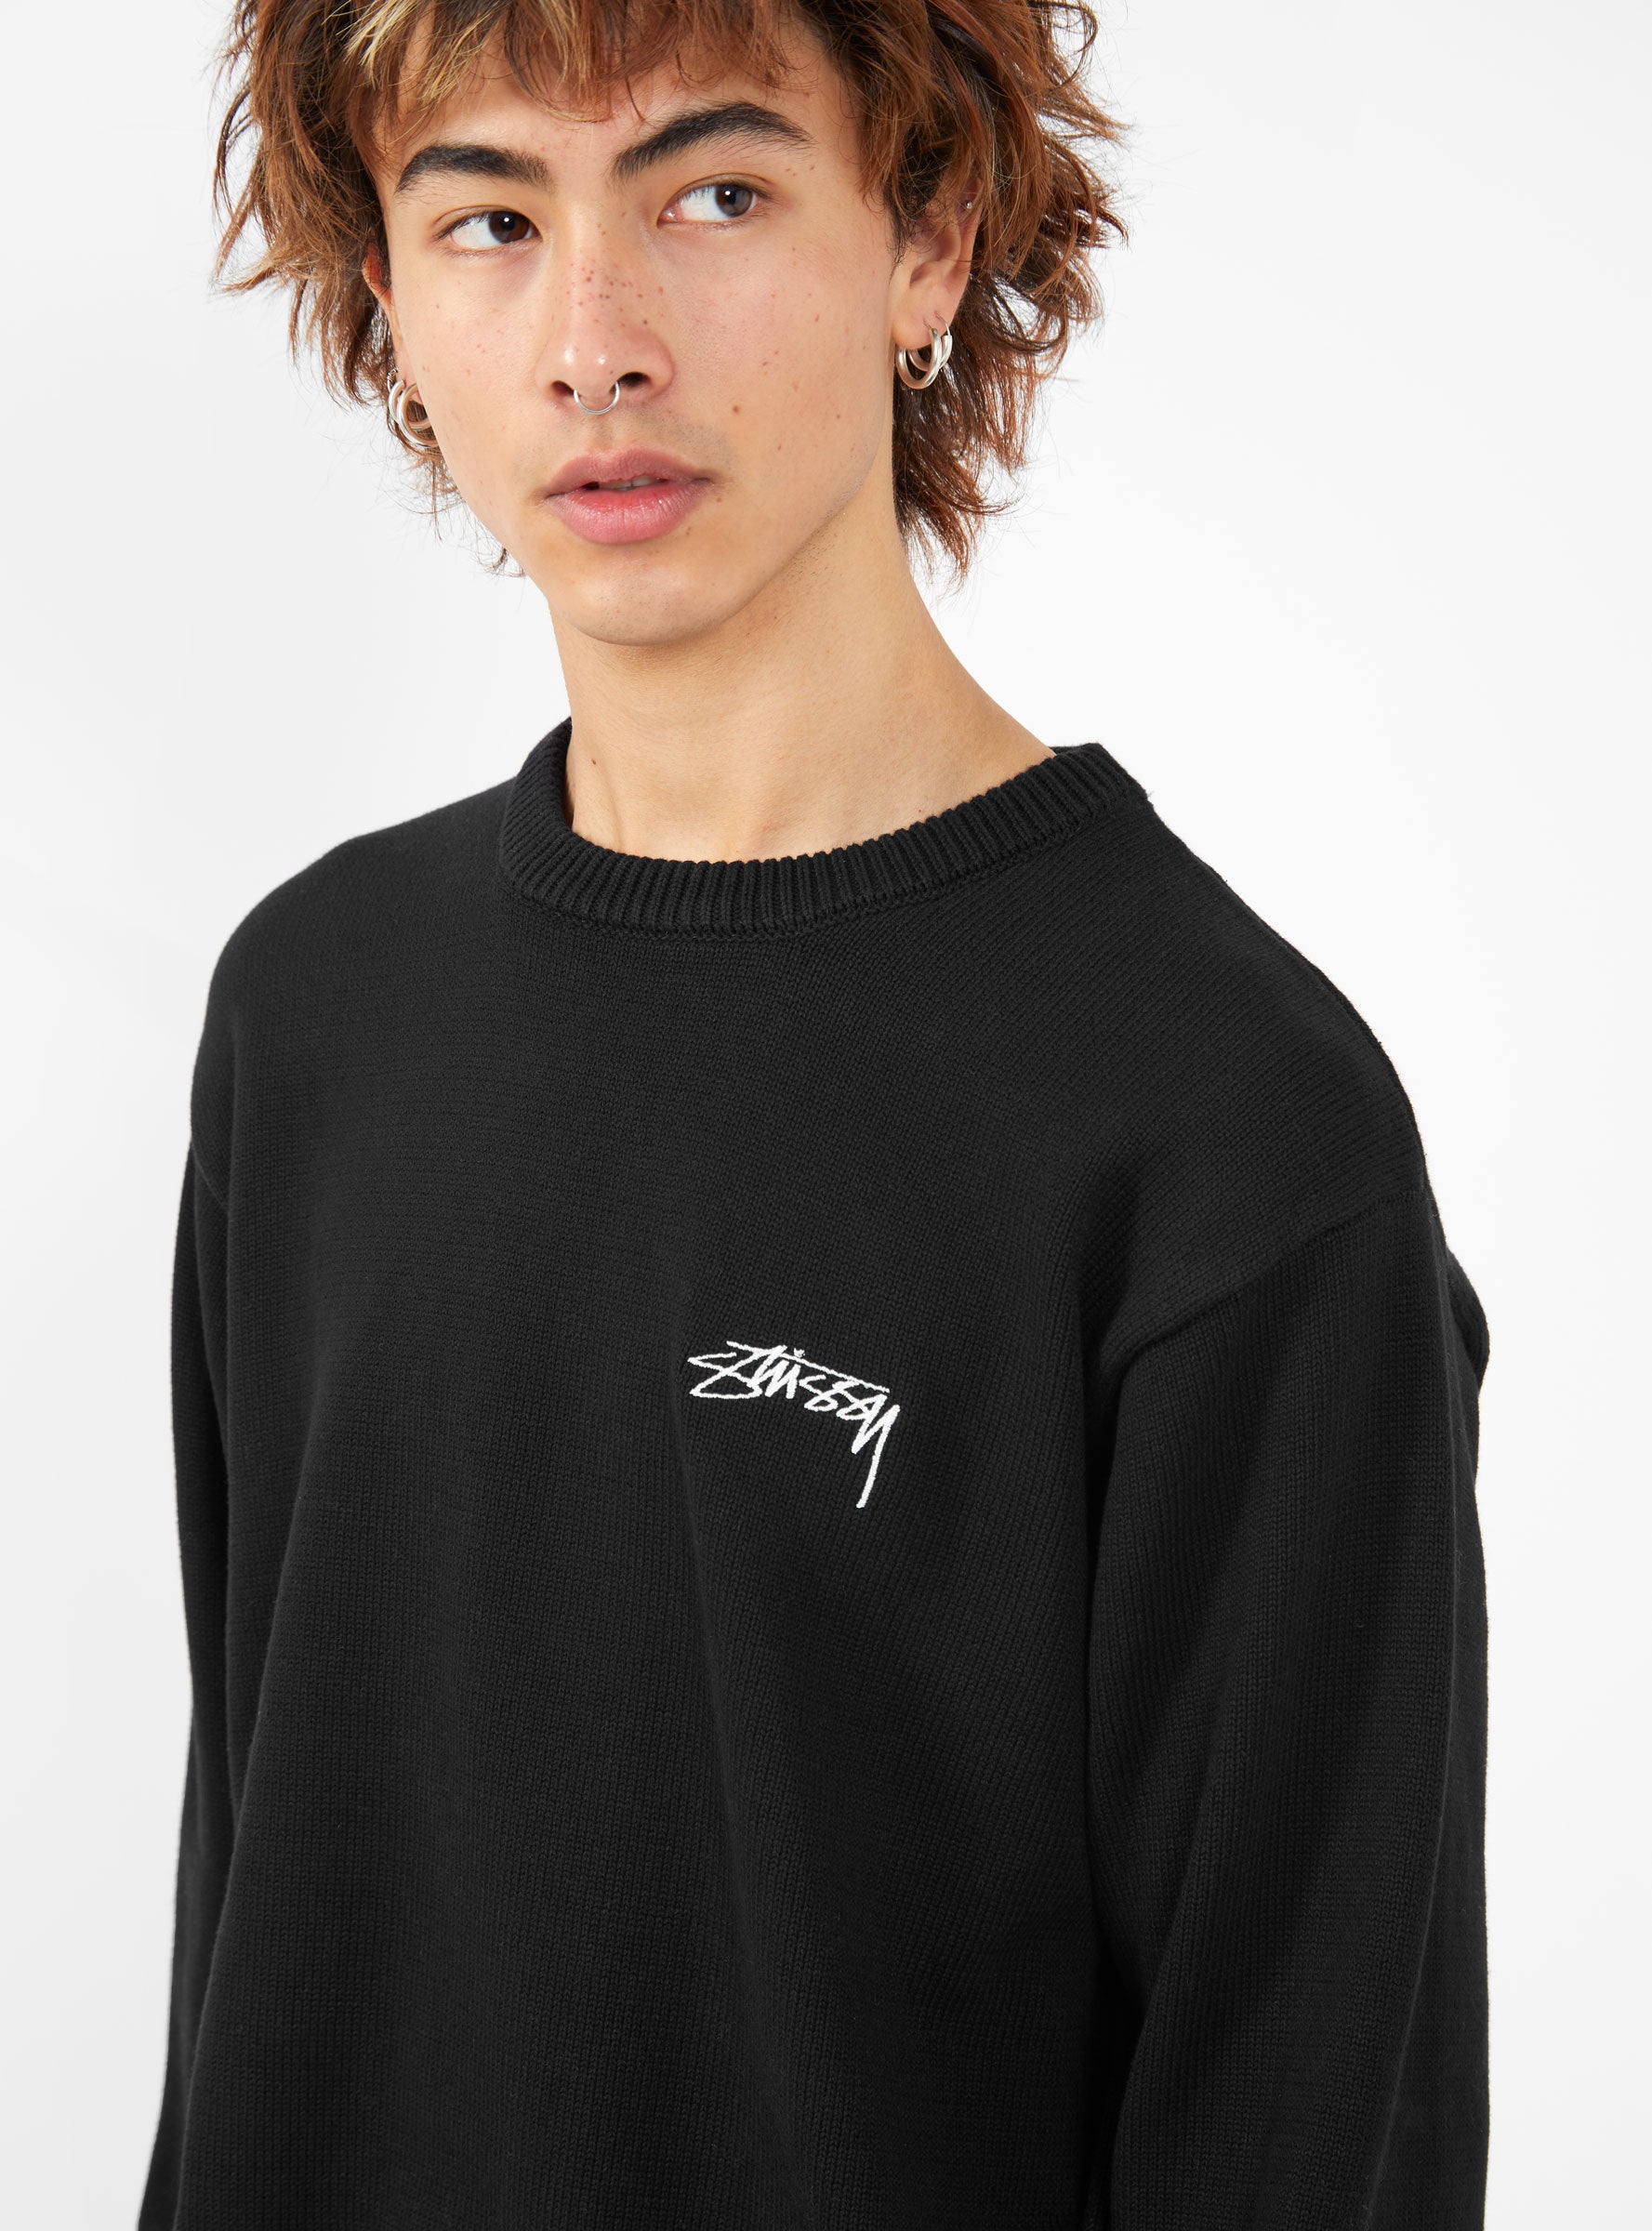 Care Label Sweater Black